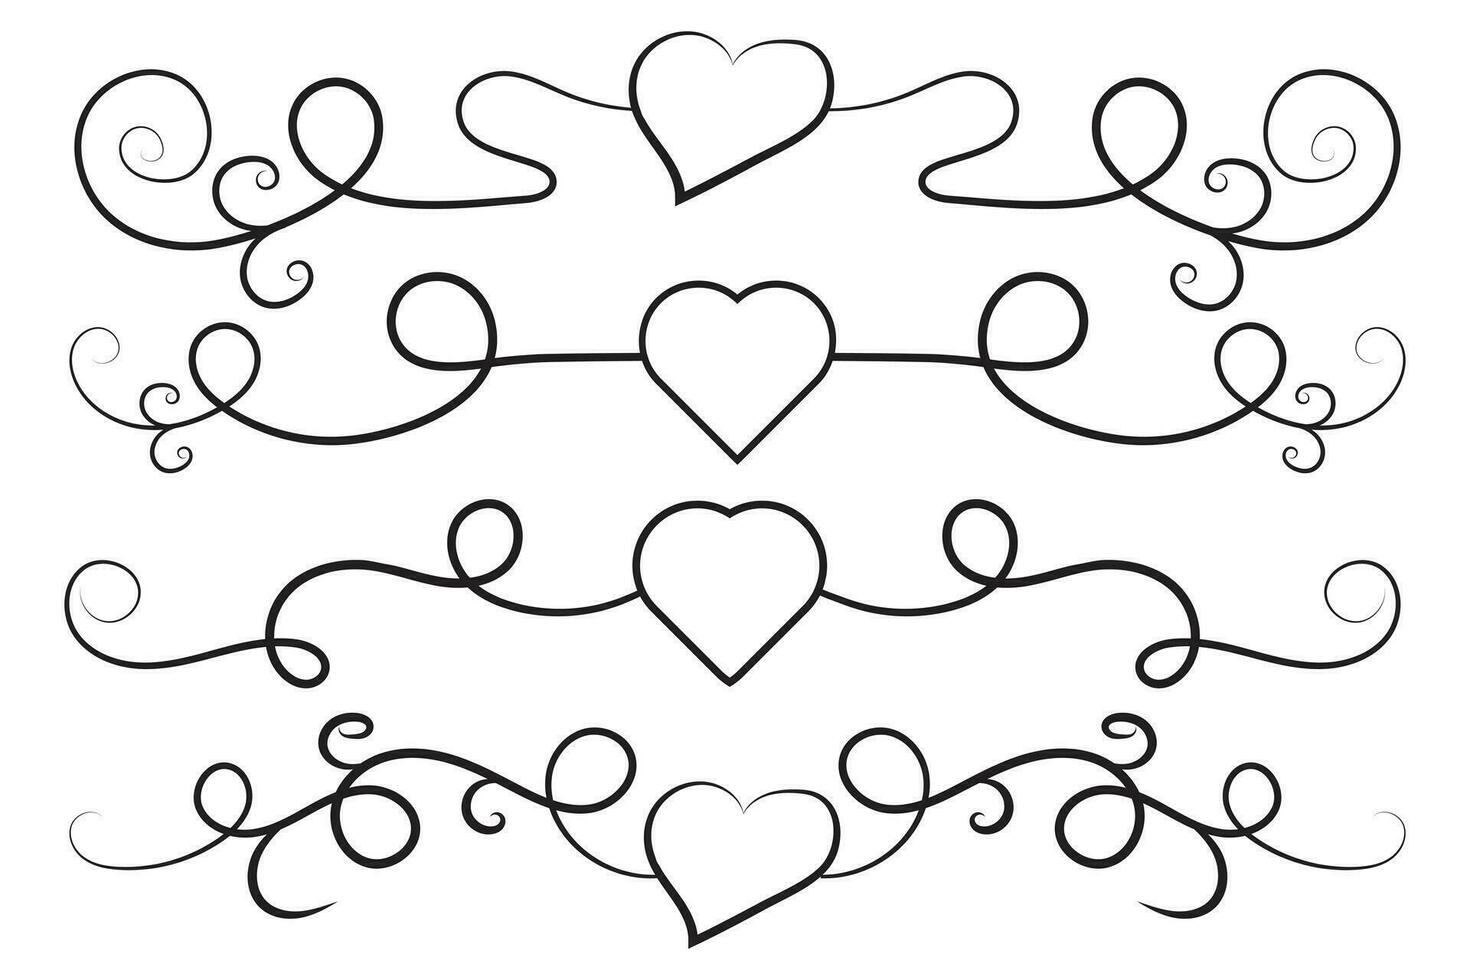 Filigree curly Calligraphic Heart, Fancy Line Flourishes Swirls hearts, curve romantic love separator, Valentines Day divider flourish Swirl, Calligraphy Flourish lettering header hearts scroll vector